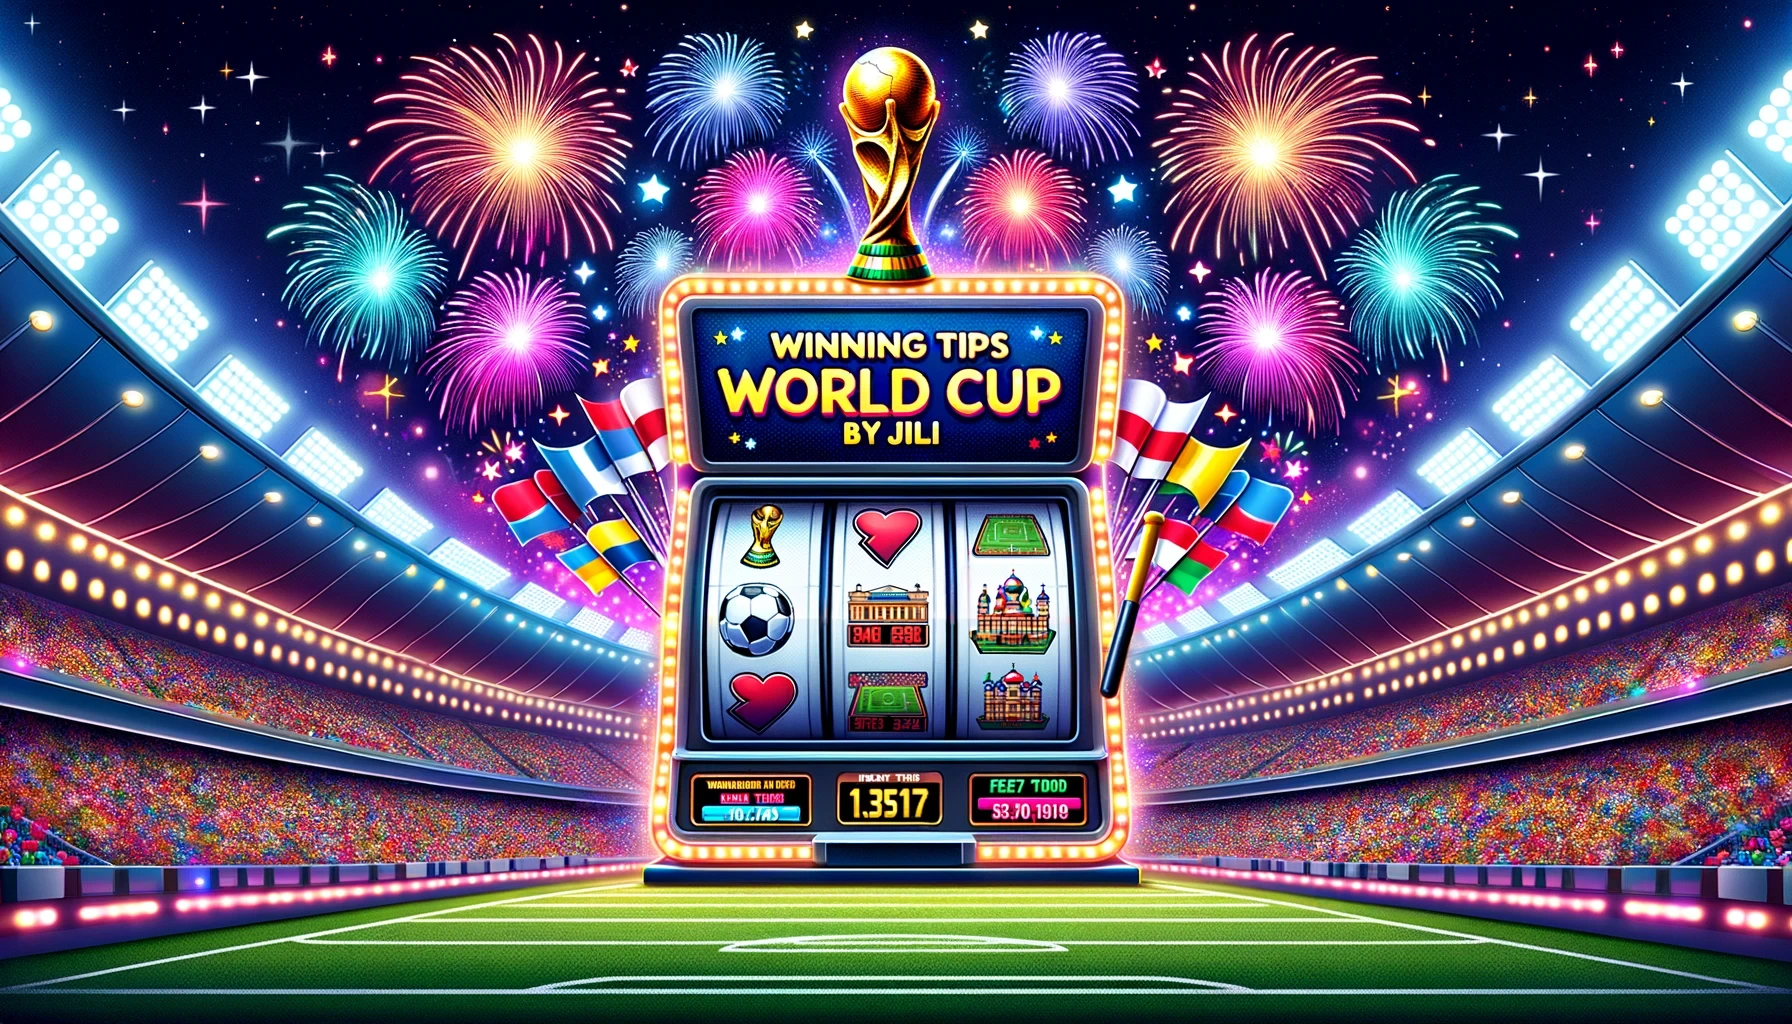 World Cup by JILI